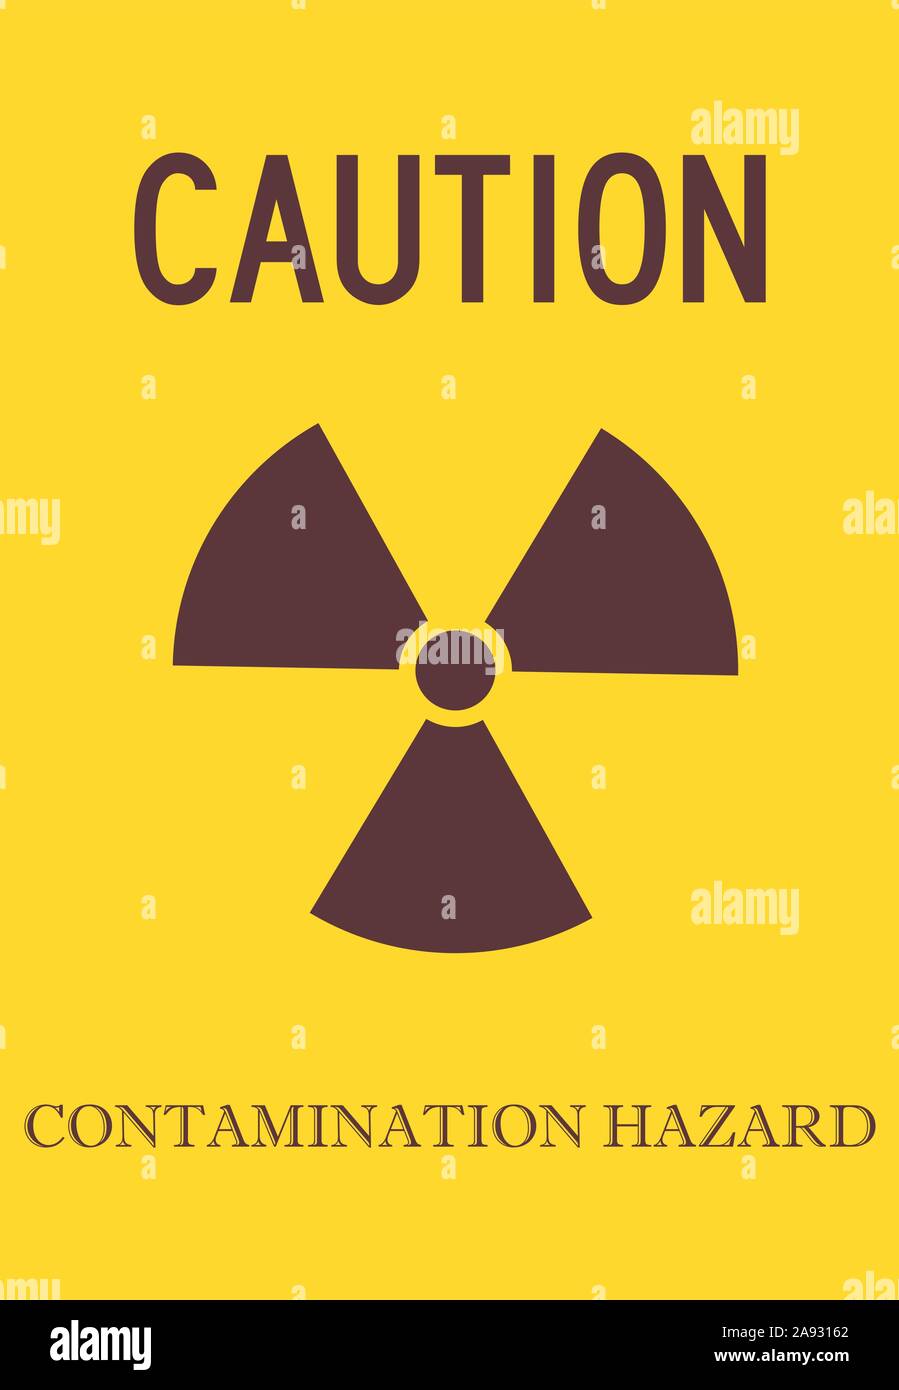 Caution contamination hazard warning sign vector. Yellow, brown color. Stock Vector